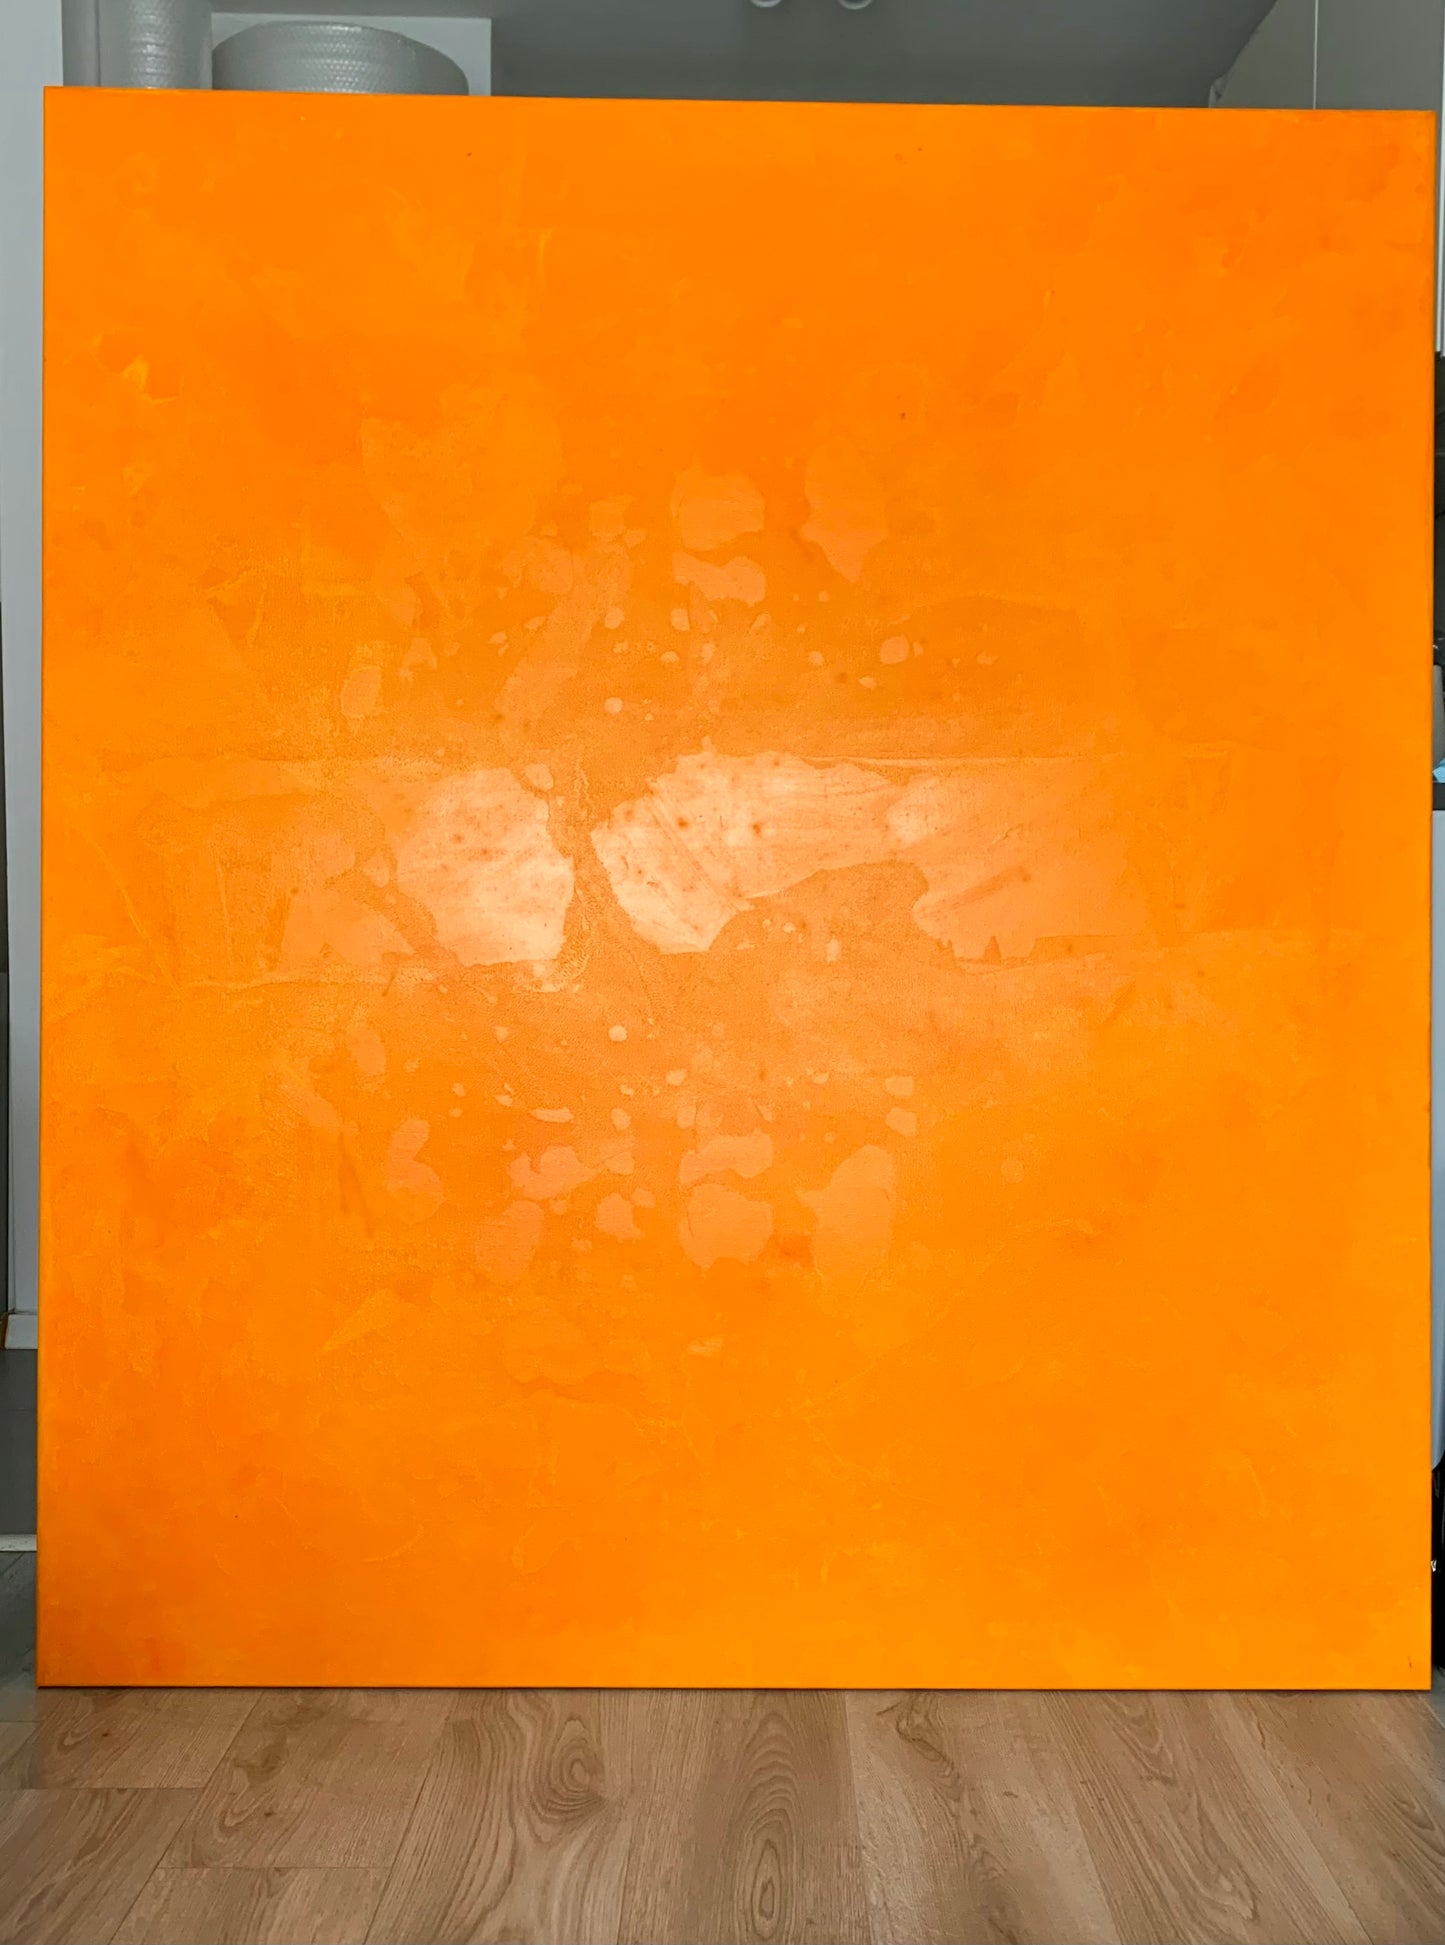 Big orange painting